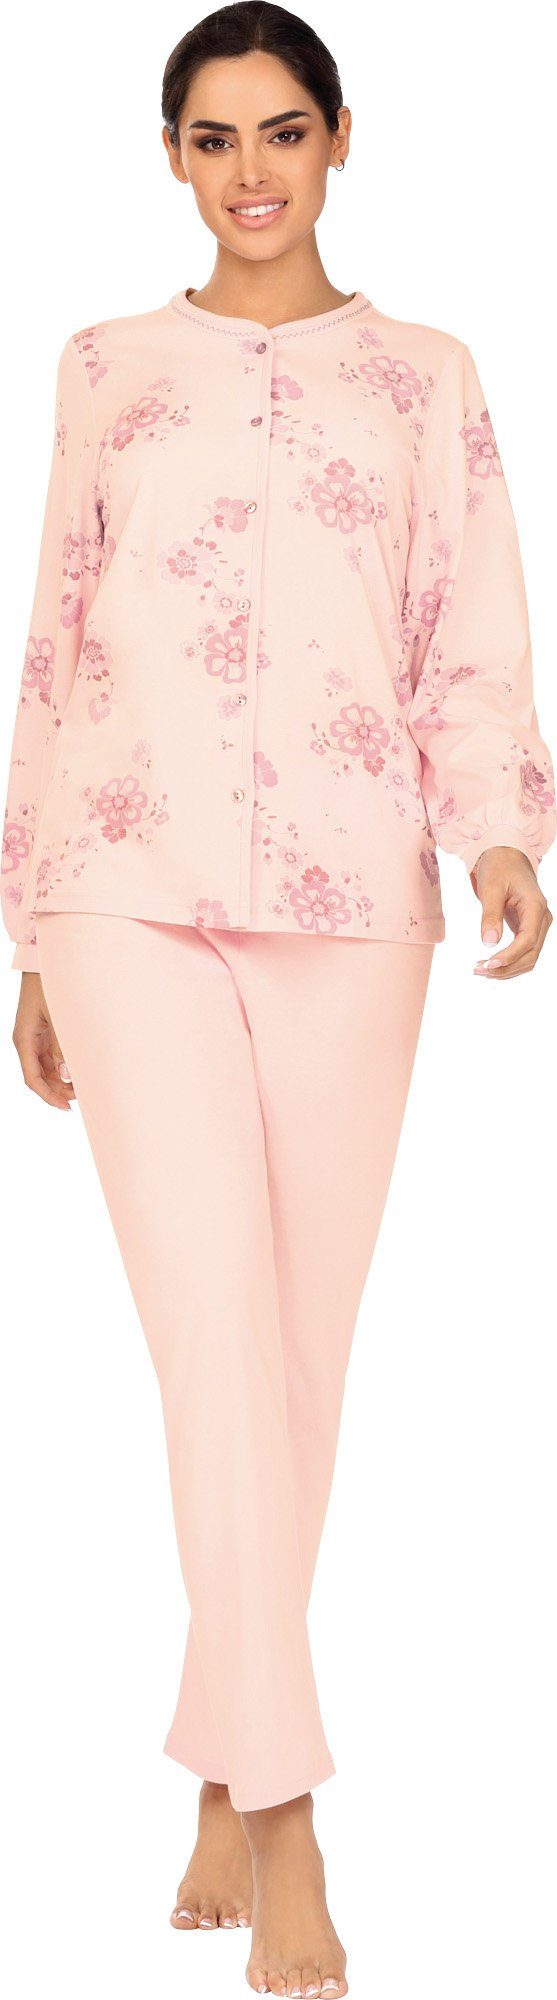 Pyjama Blumen comtessa Damen-Schlafanzug Single-Jersey